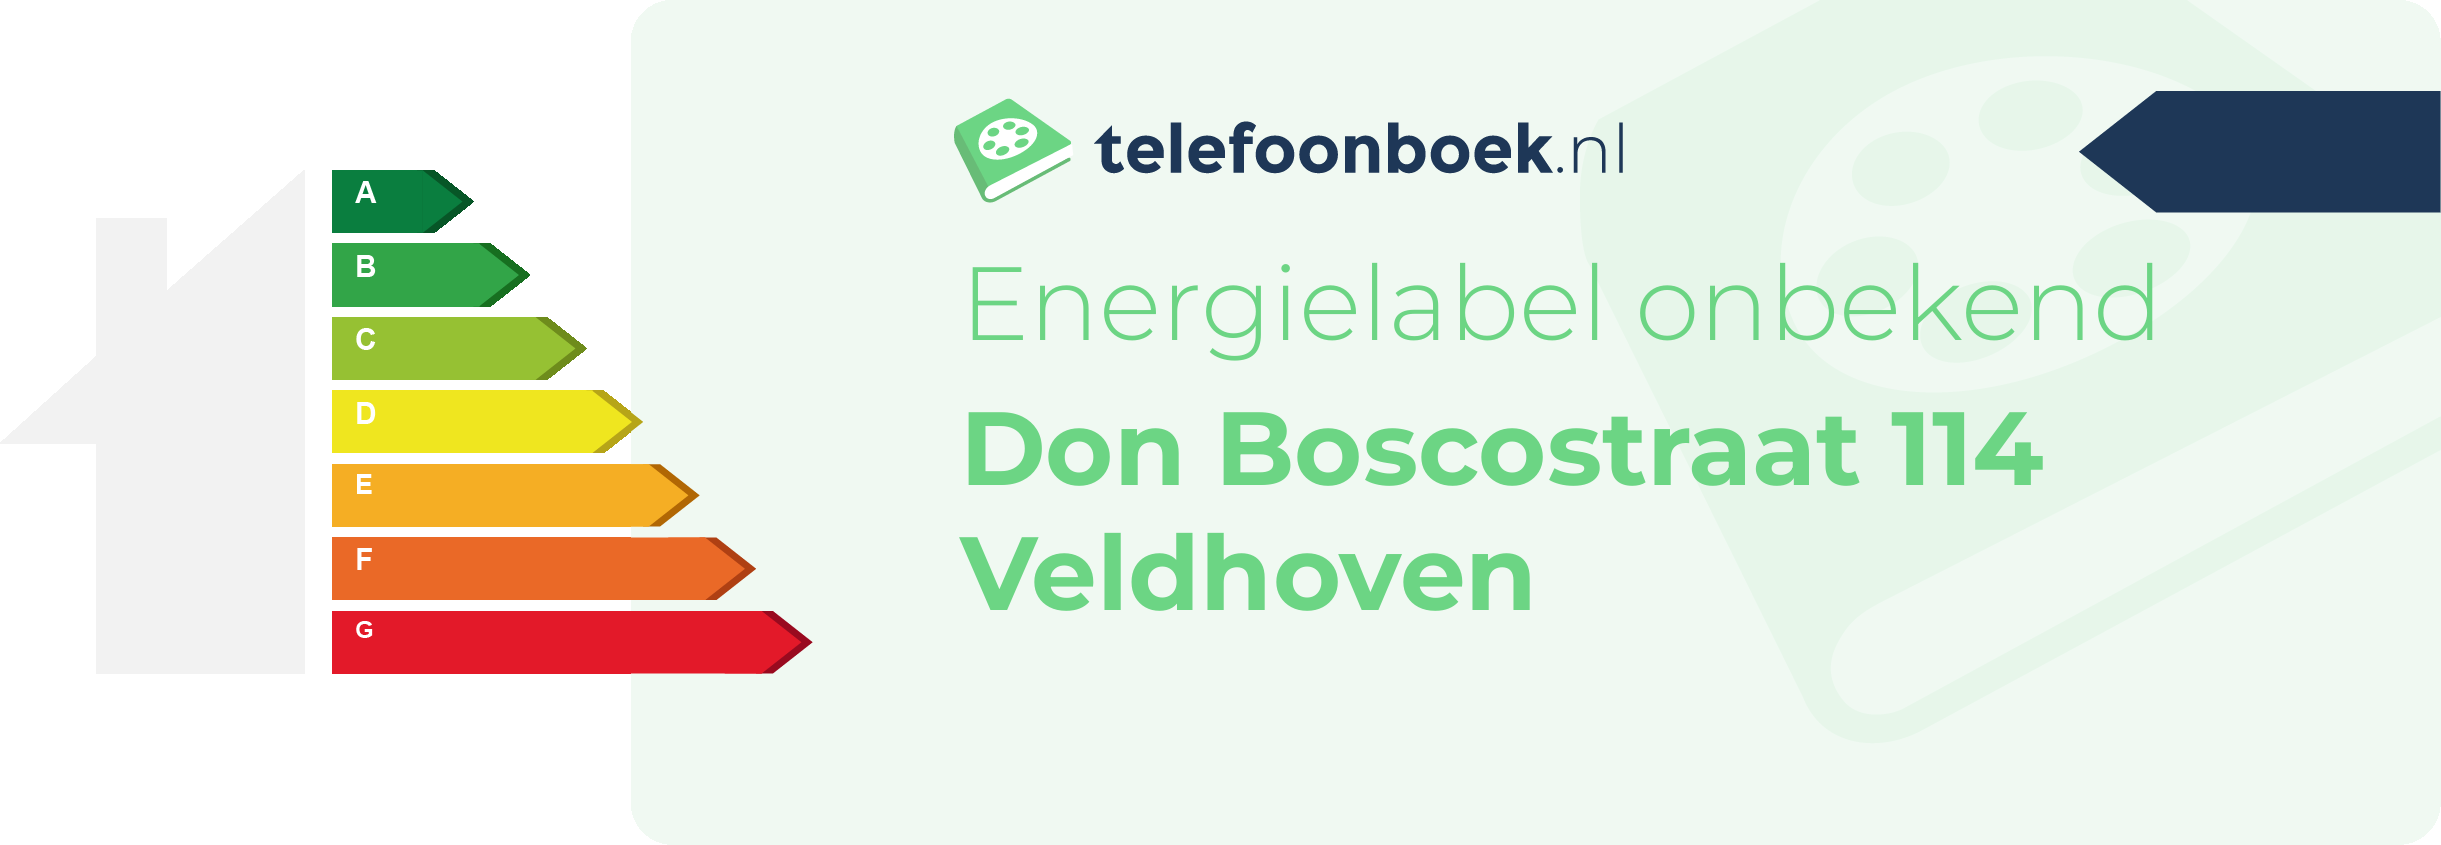 Energielabel Don Boscostraat 114 Veldhoven